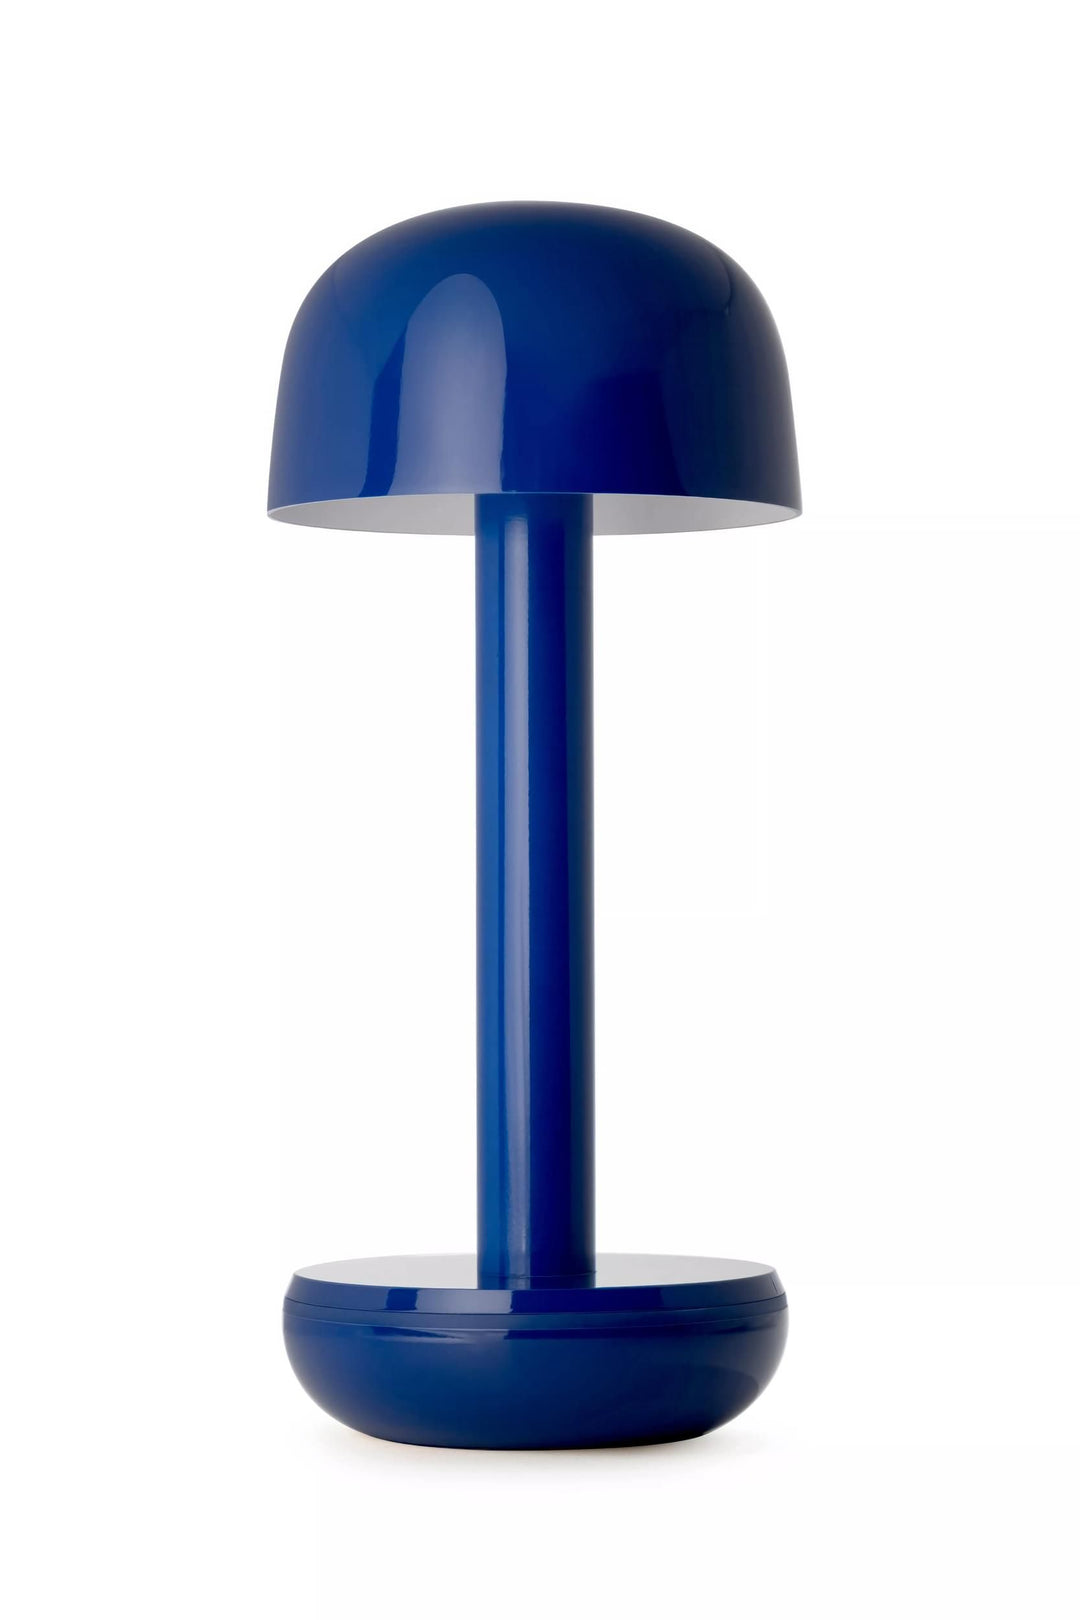 humble-portable-contemporary-table-lights-cobalt-blue-sleek-modern